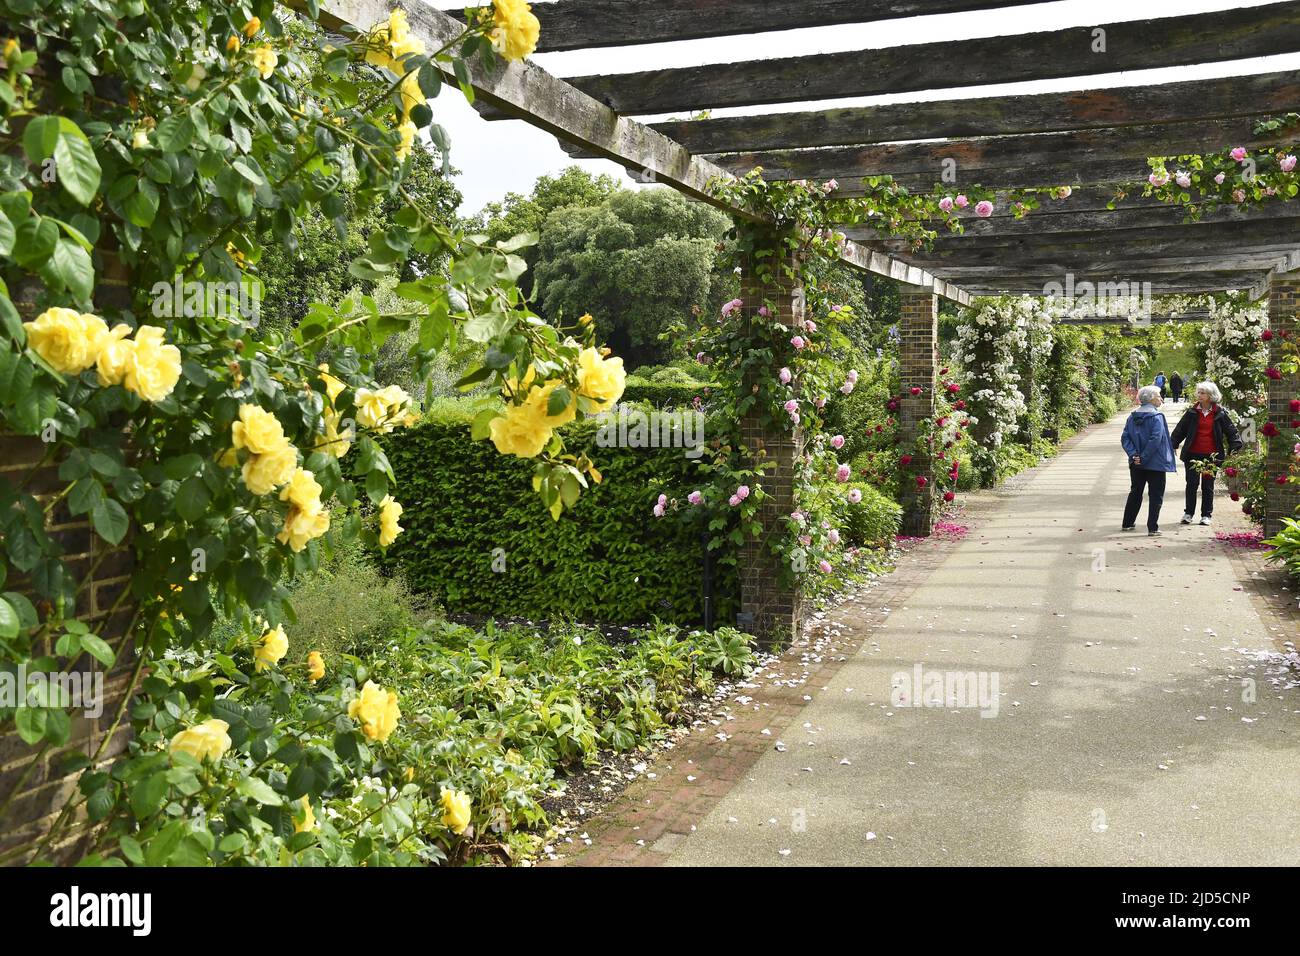 Pergolas with roses in spring, Royal Botanic Gardens Kew London UK. Stock Photo